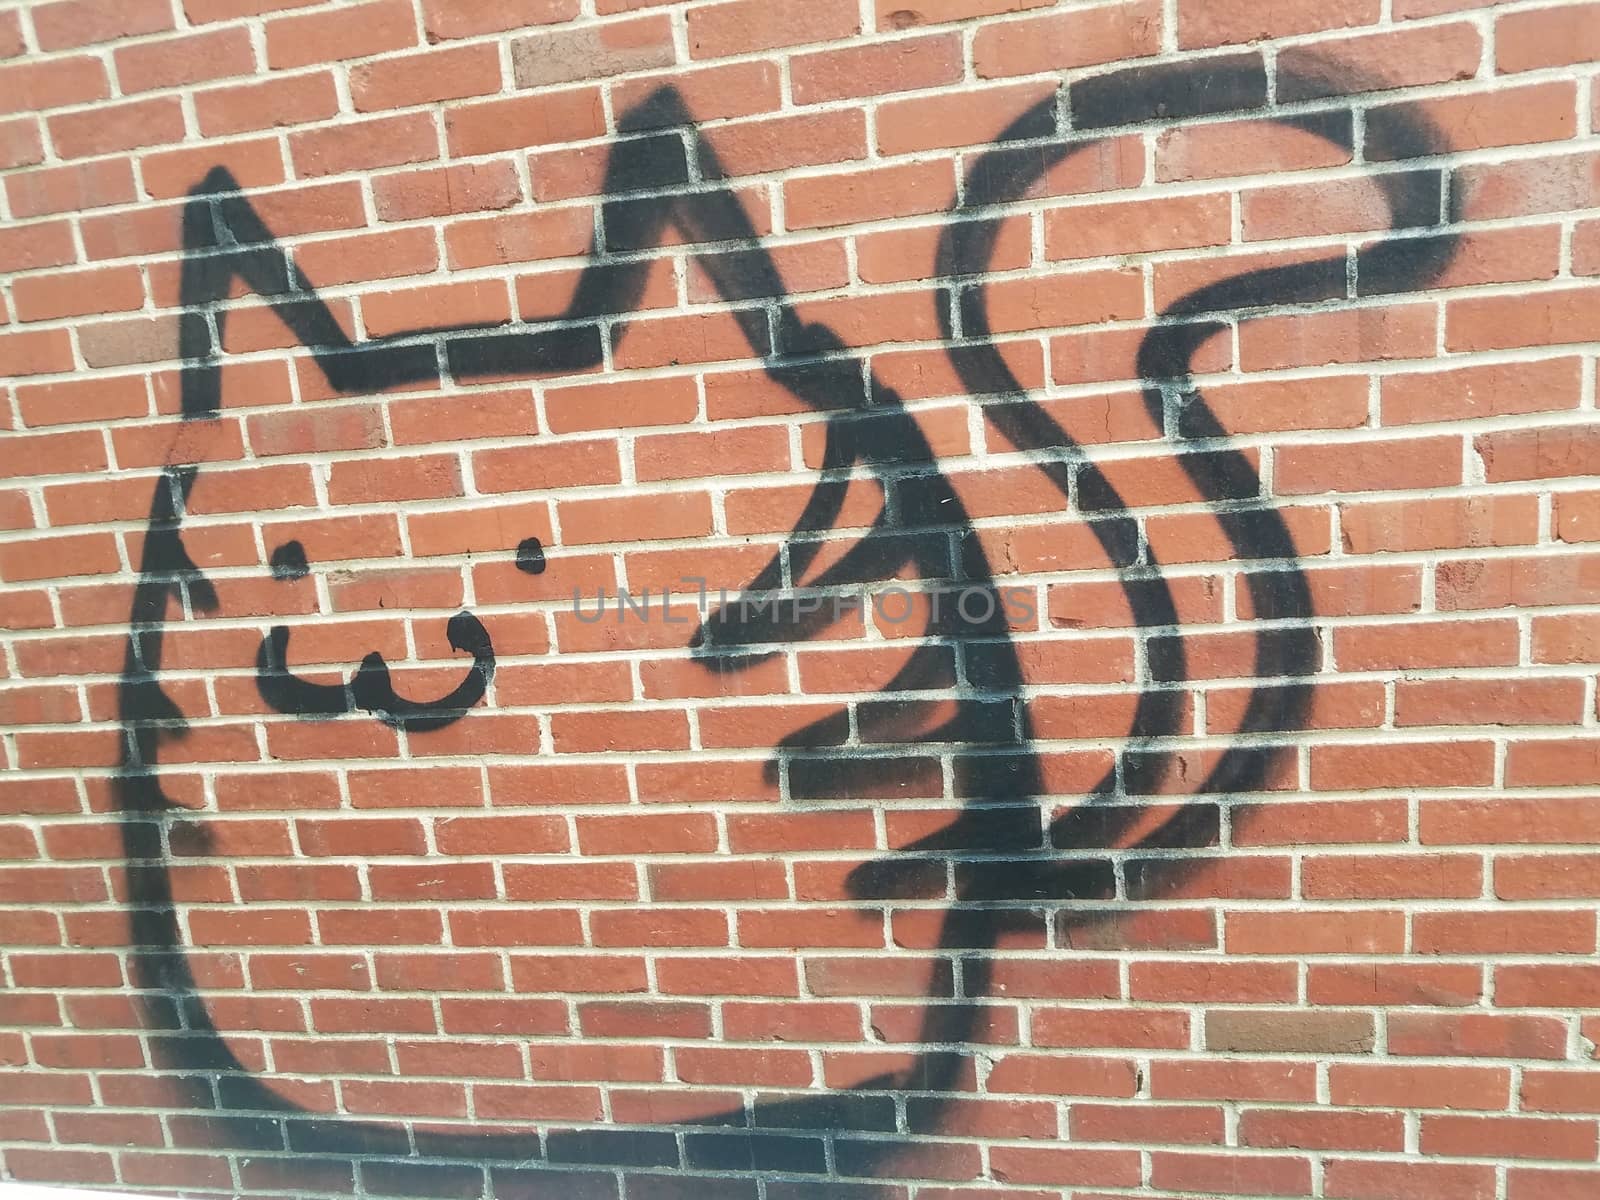 cat or animal graffiti vandalism on red brick wall by stockphotofan1